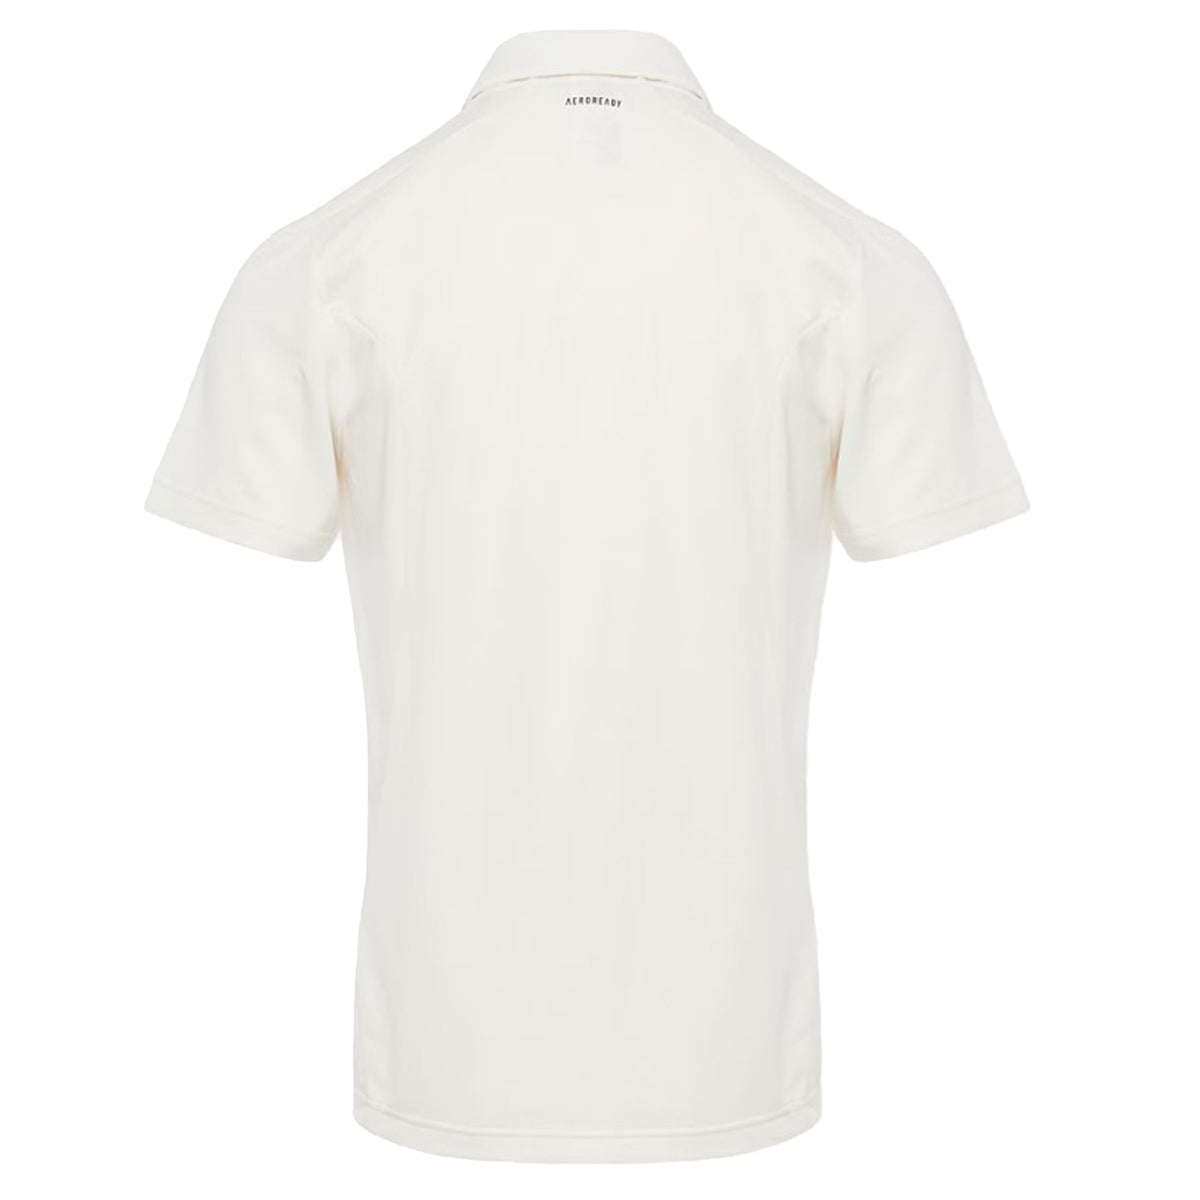 Wooburn Narkovians CC Junior Adidas Short Sleeve Playing Shirt